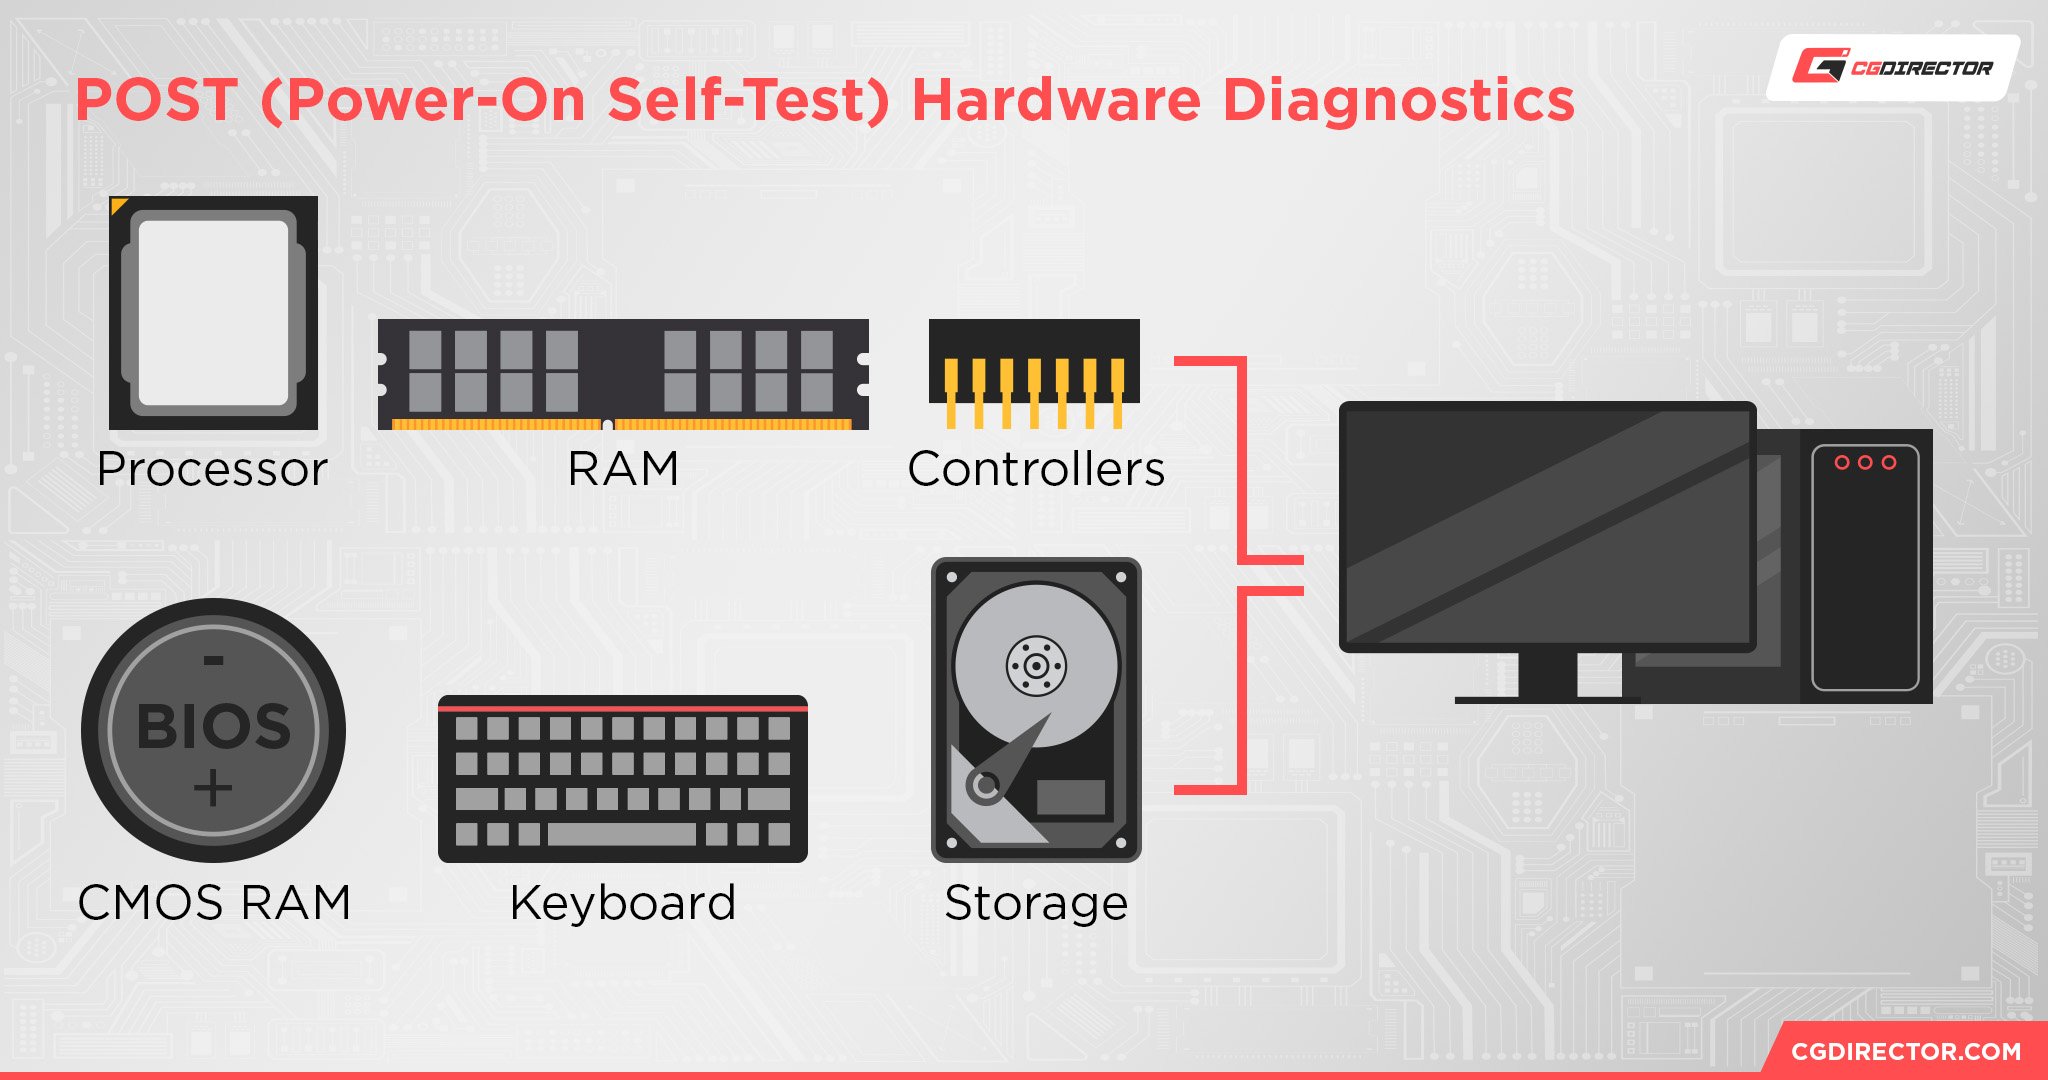 POST (Power-On Self-Test) Hardware Diagnostics